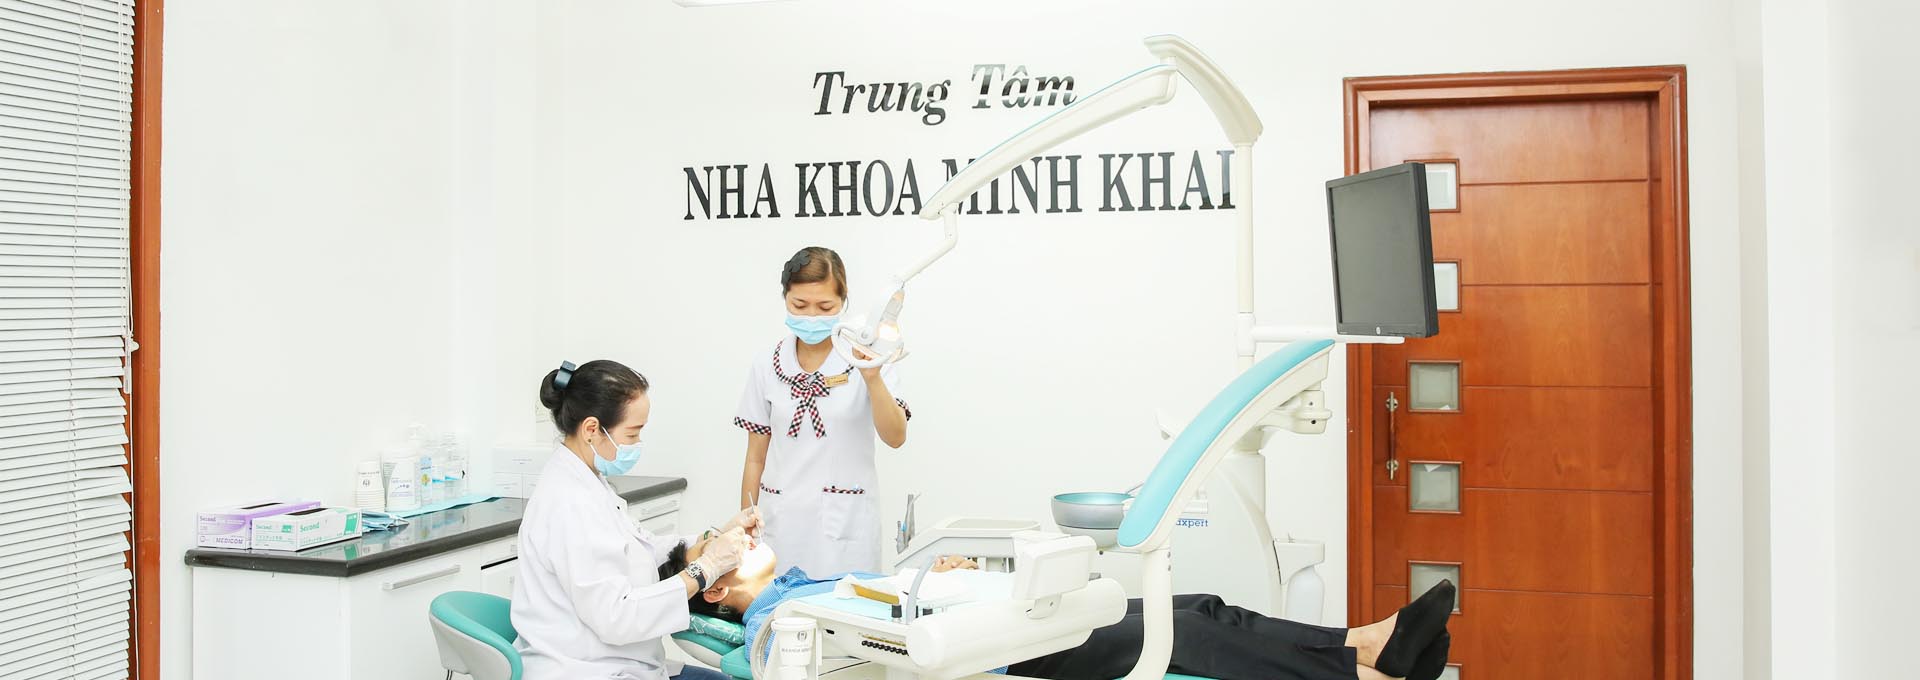 Nha khoa Minh Khai - phòng khám nha khoa TP.HCM